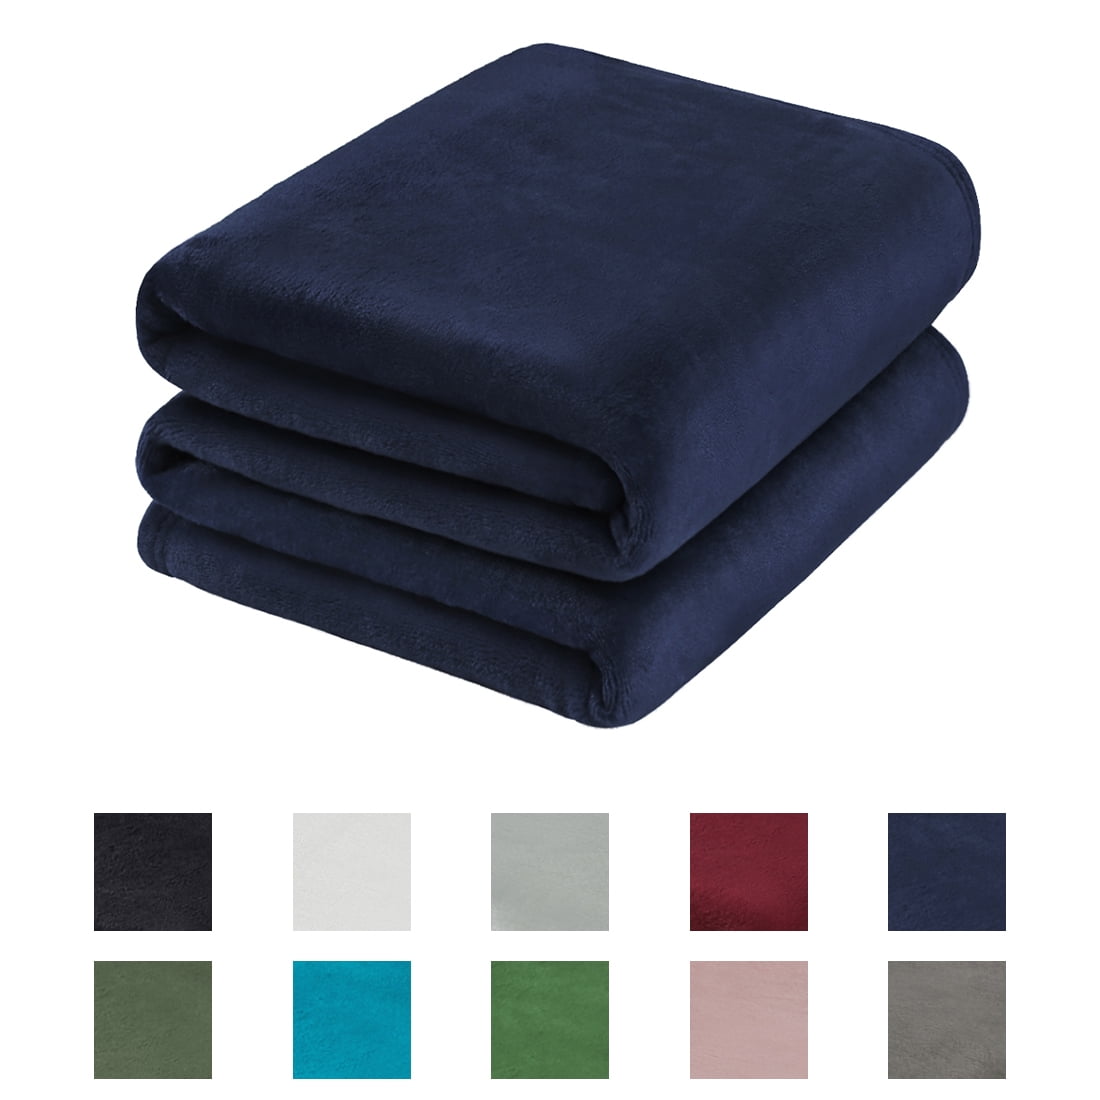 Unique Bargains Microfiber Plush Fleece Blanket for Sofa Bed, King, Black 